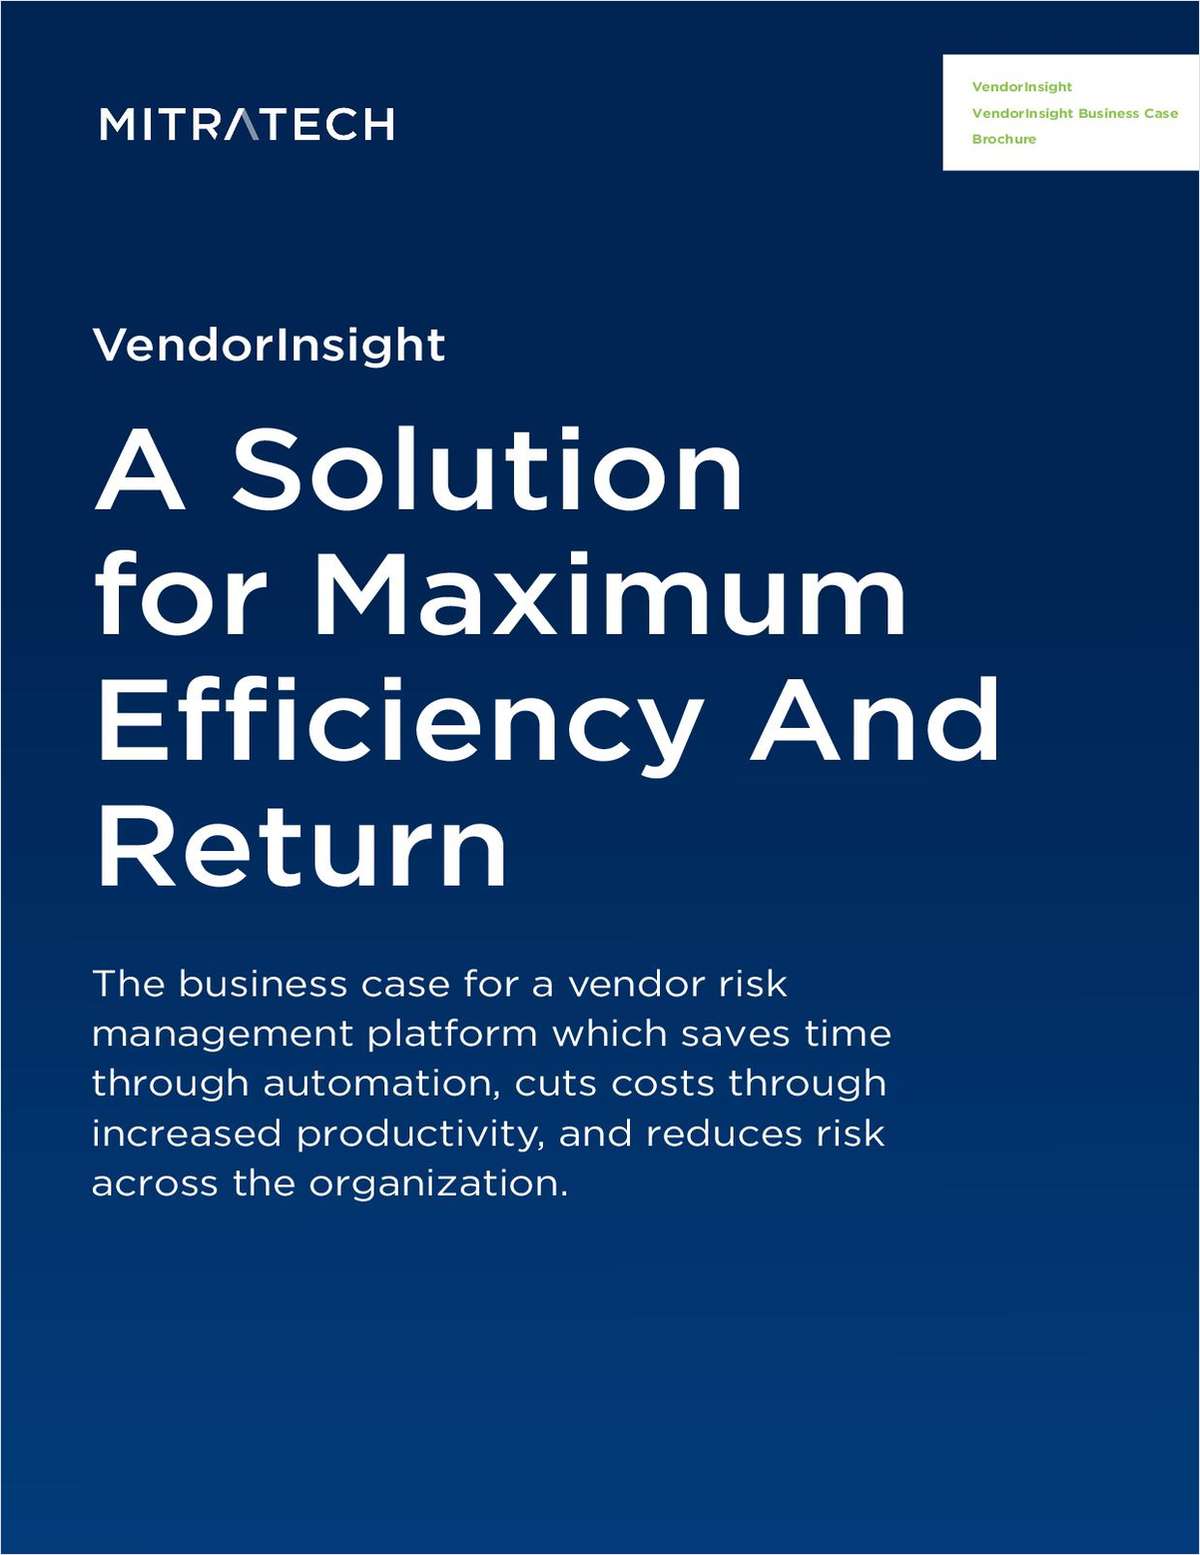 VendorInsight Brochure: A Solution for Maximum Efficiency and Return